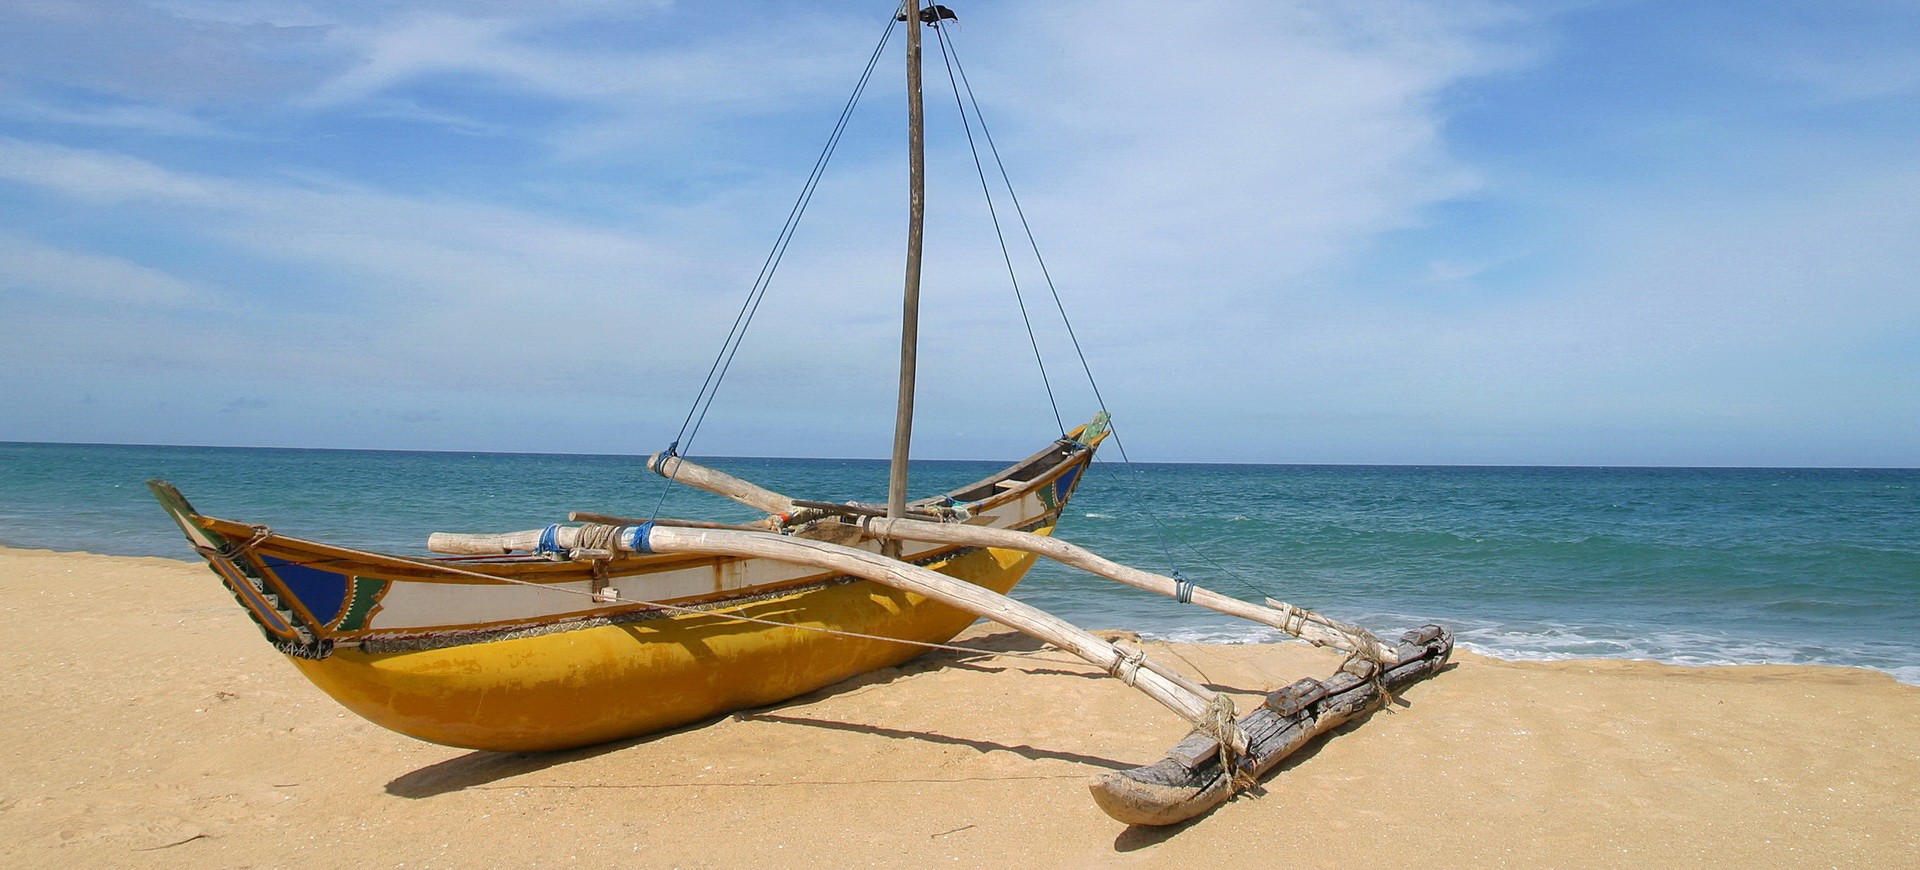 Sri Lanka Négombo Bateau de Pêcheur sur la Plage